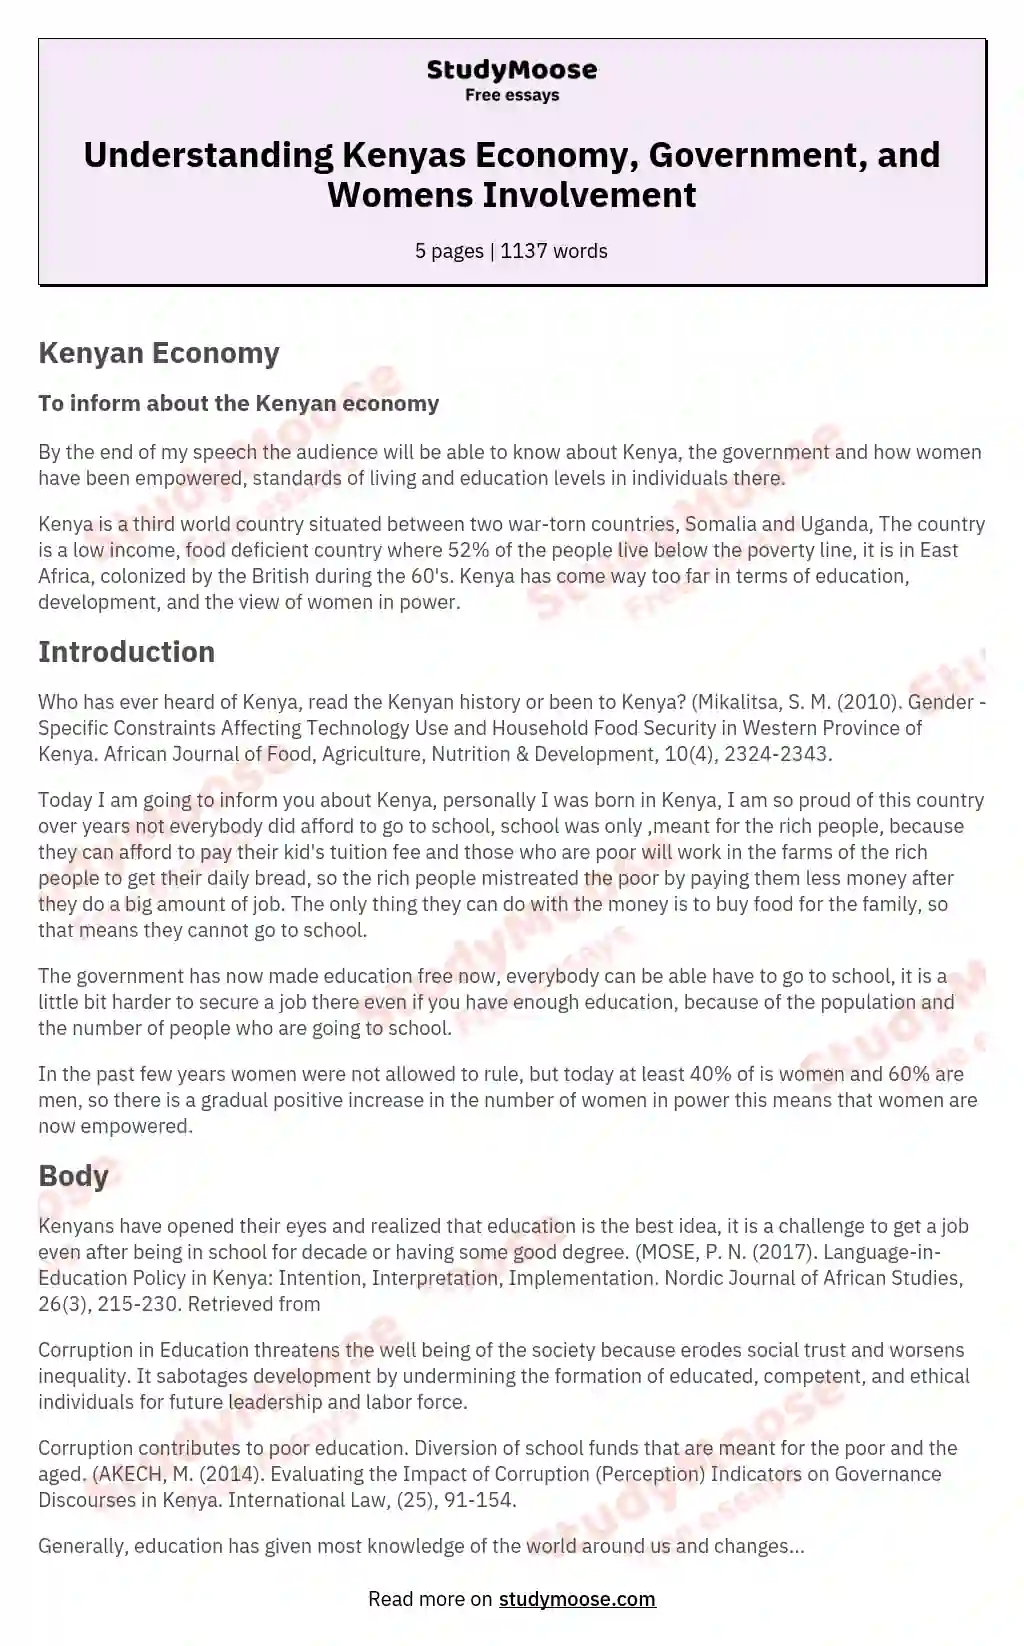 Understanding Kenyas Economy, Government, and Womens Involvement essay